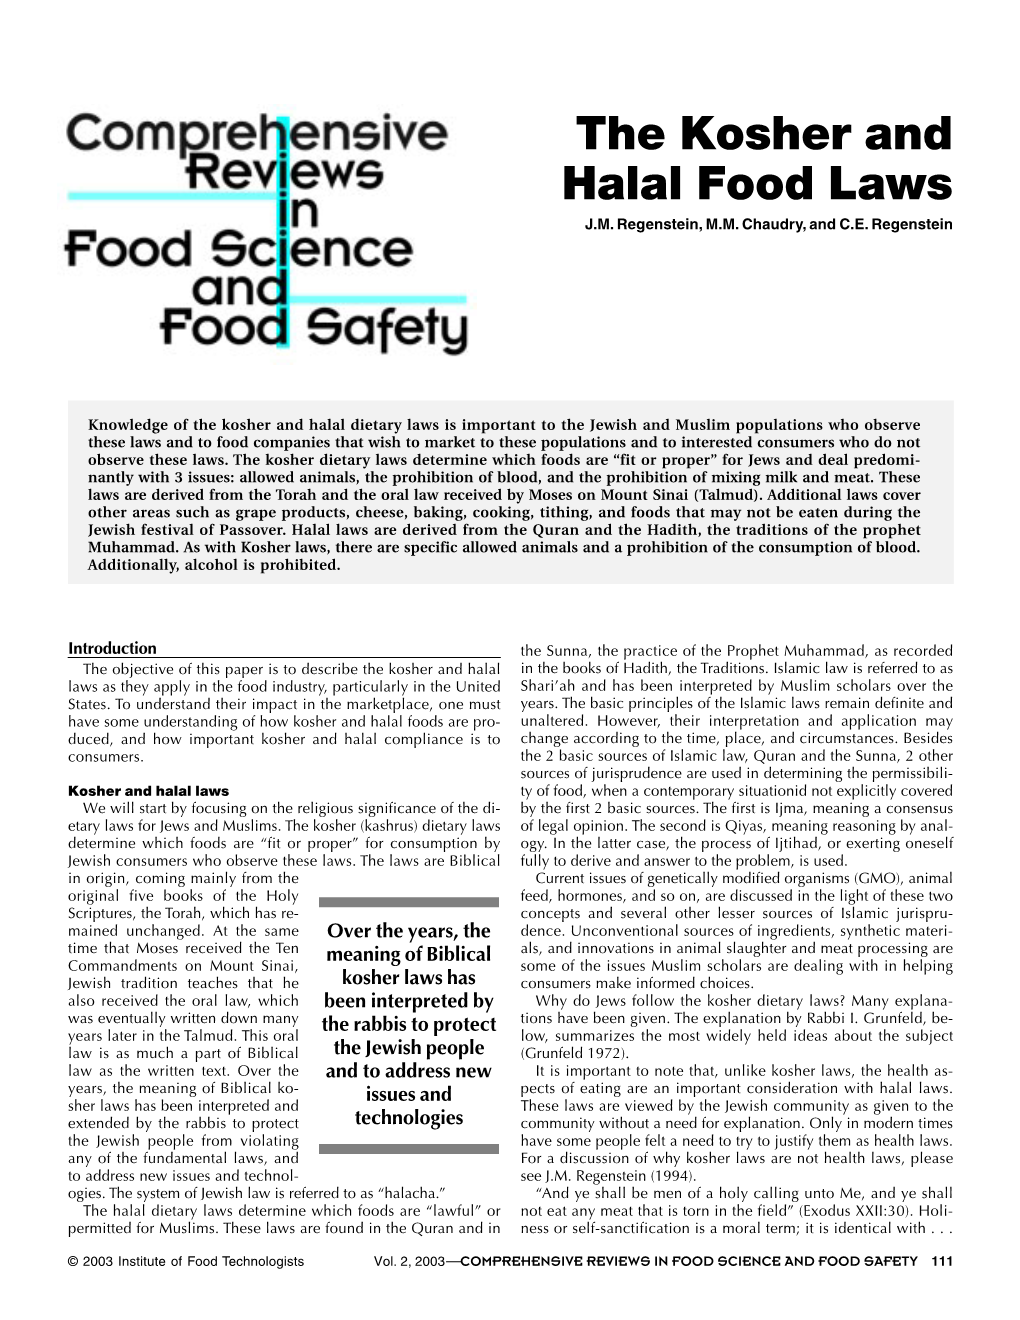 The Kosher and Halal Food Laws J.M